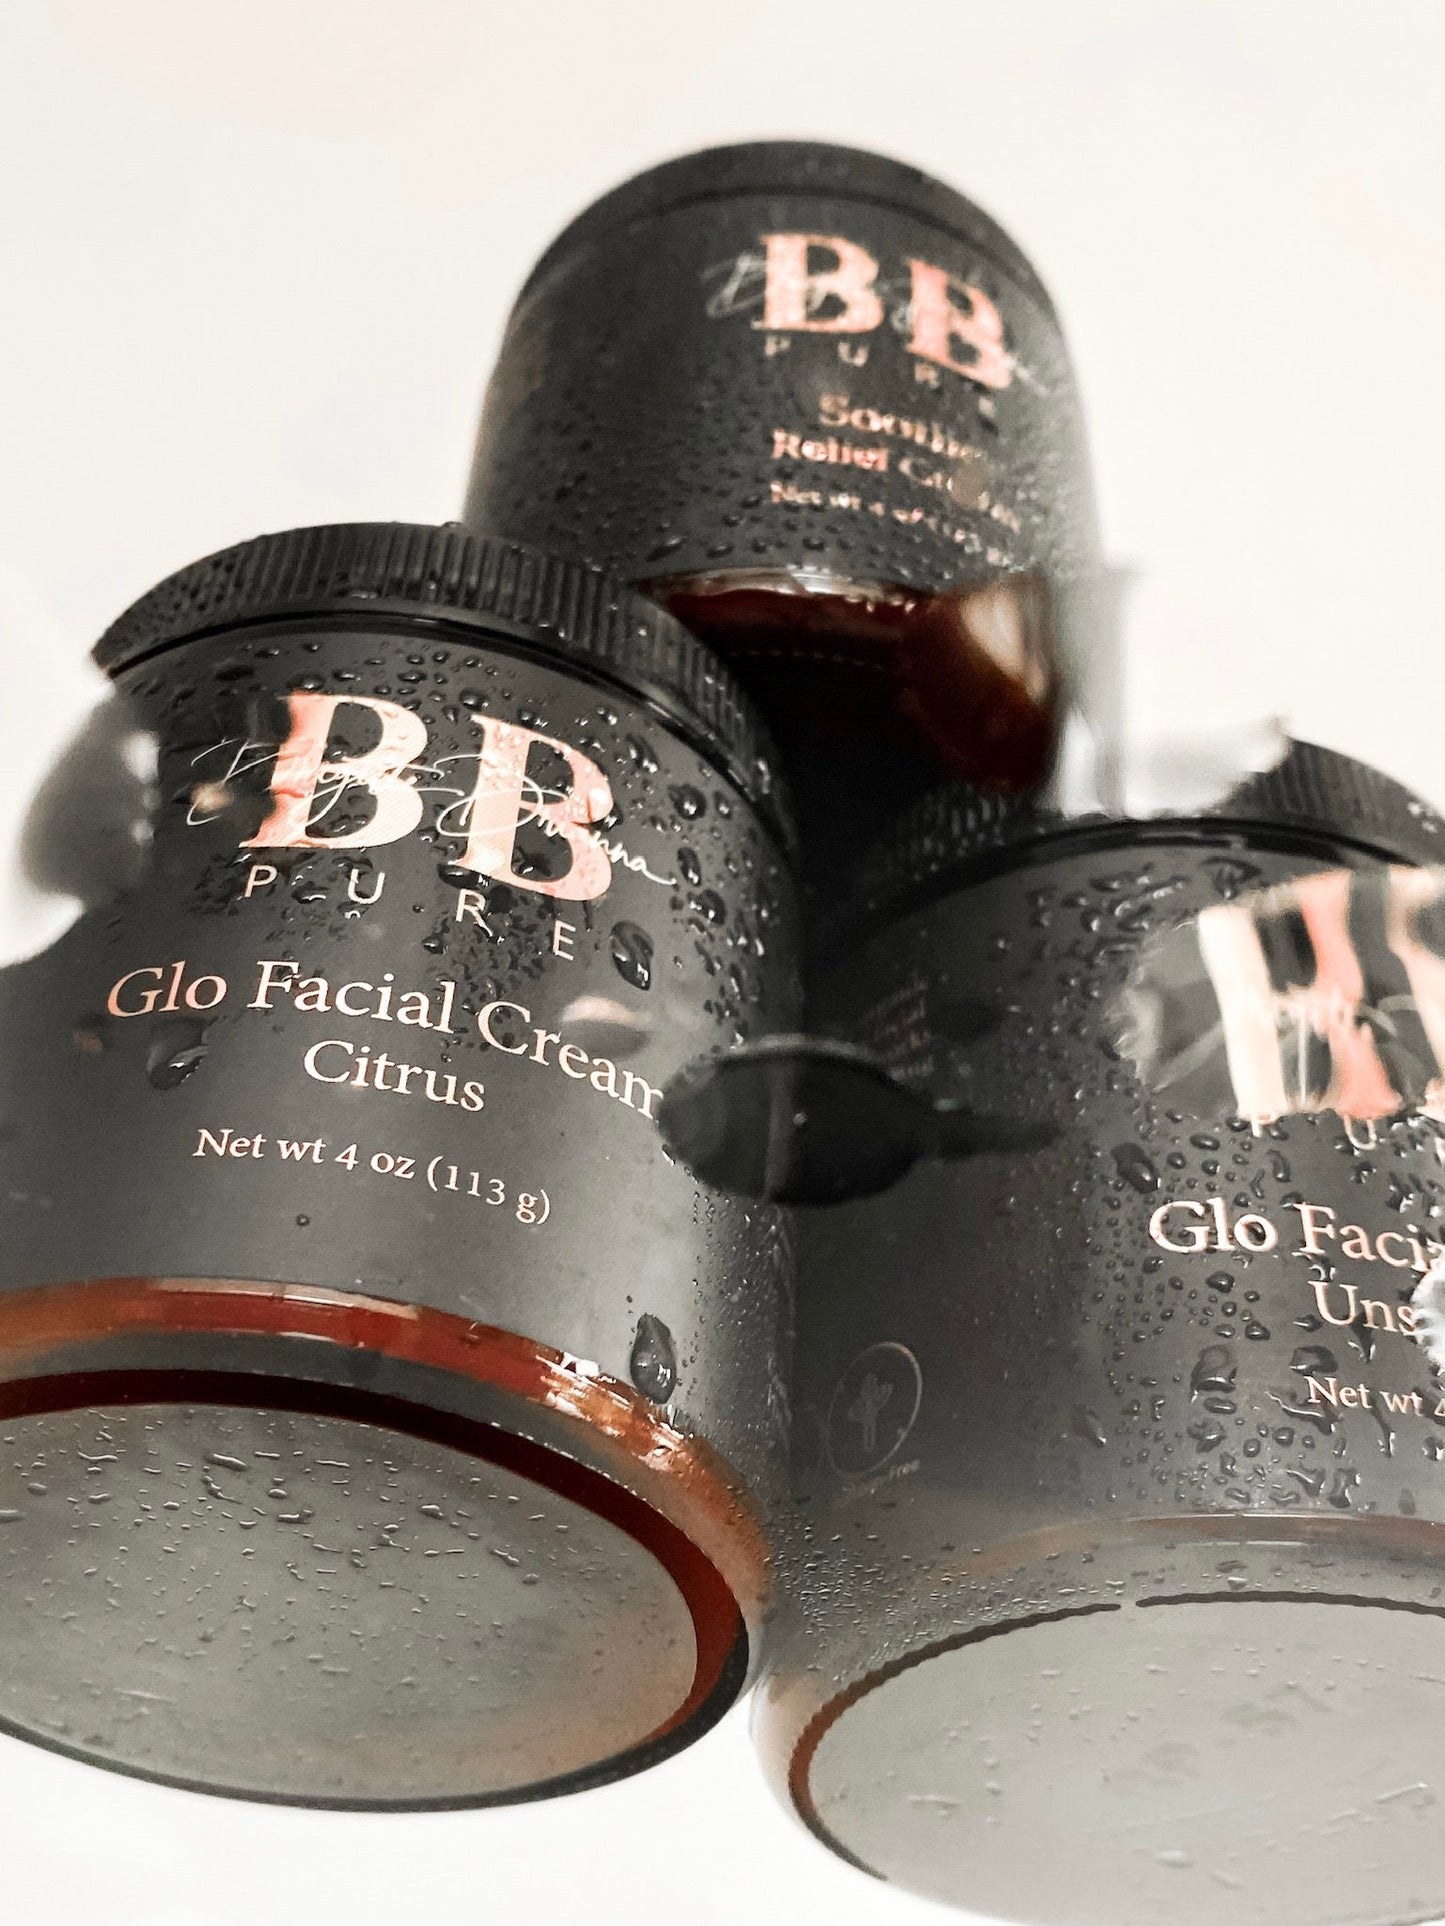 BB Pure Glo Facial Cream